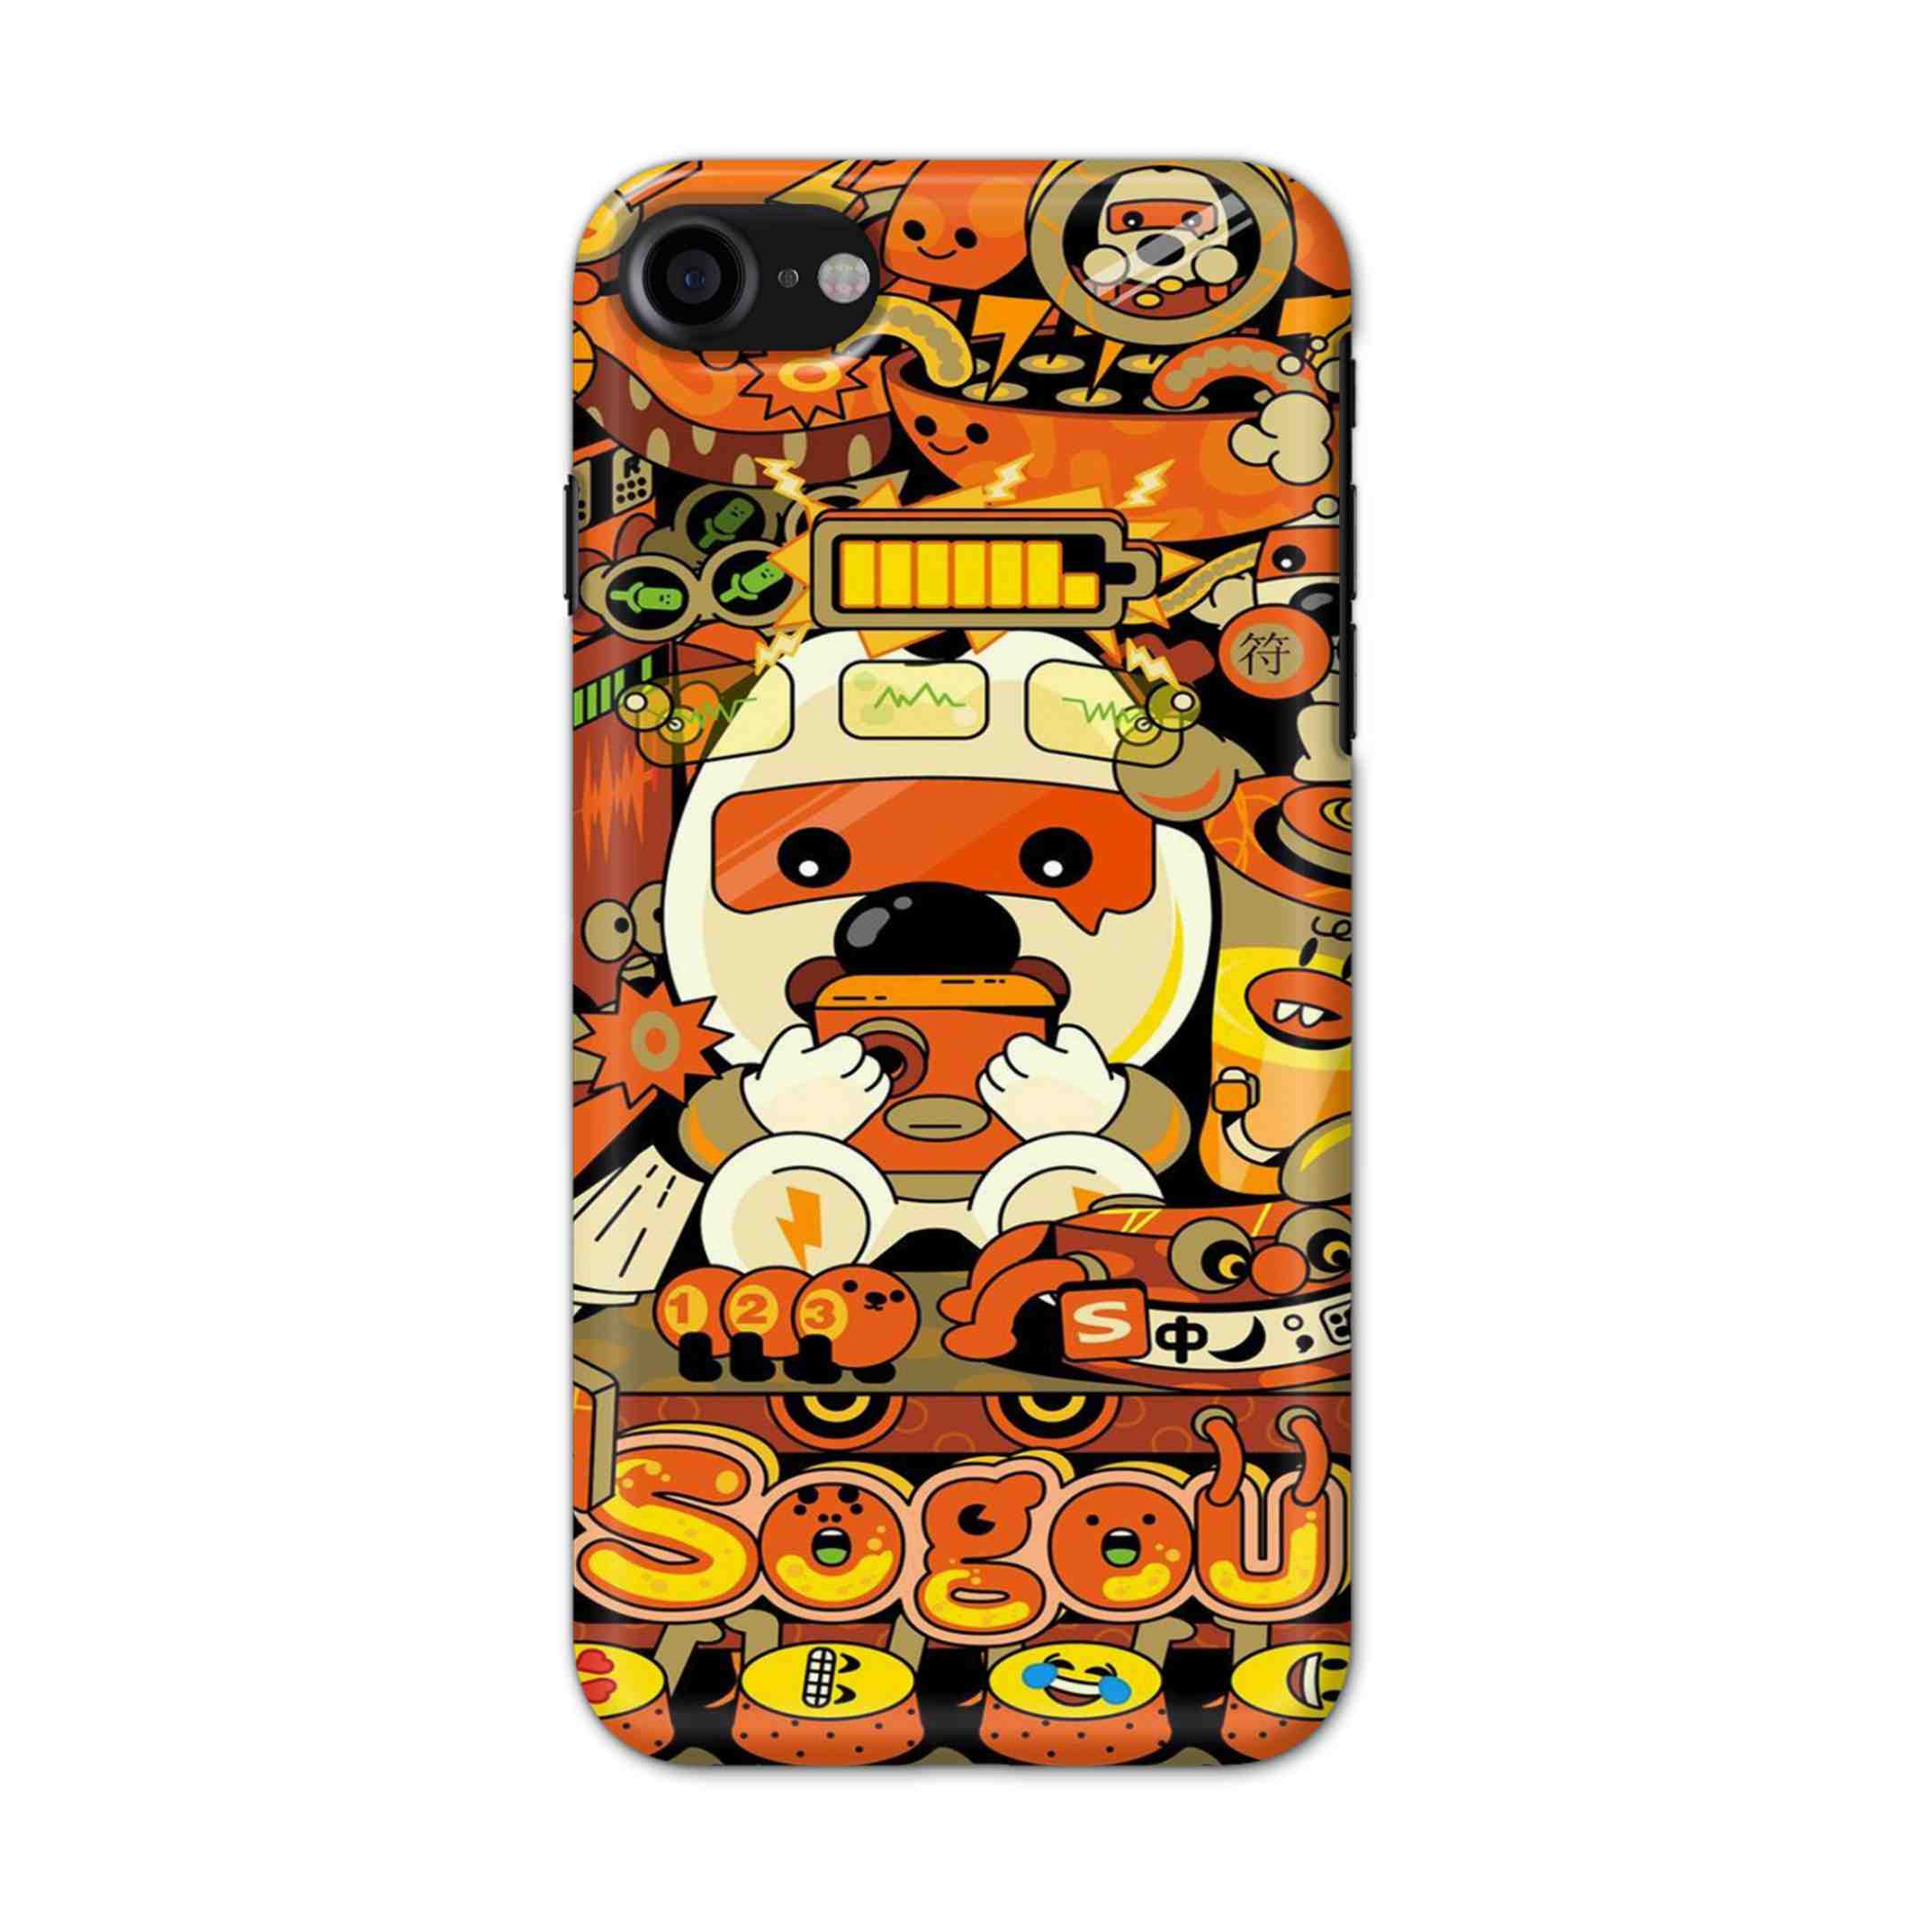 Buy Sogou Hard Back Mobile Phone Case/Cover For iPhone 7 / 8 Online